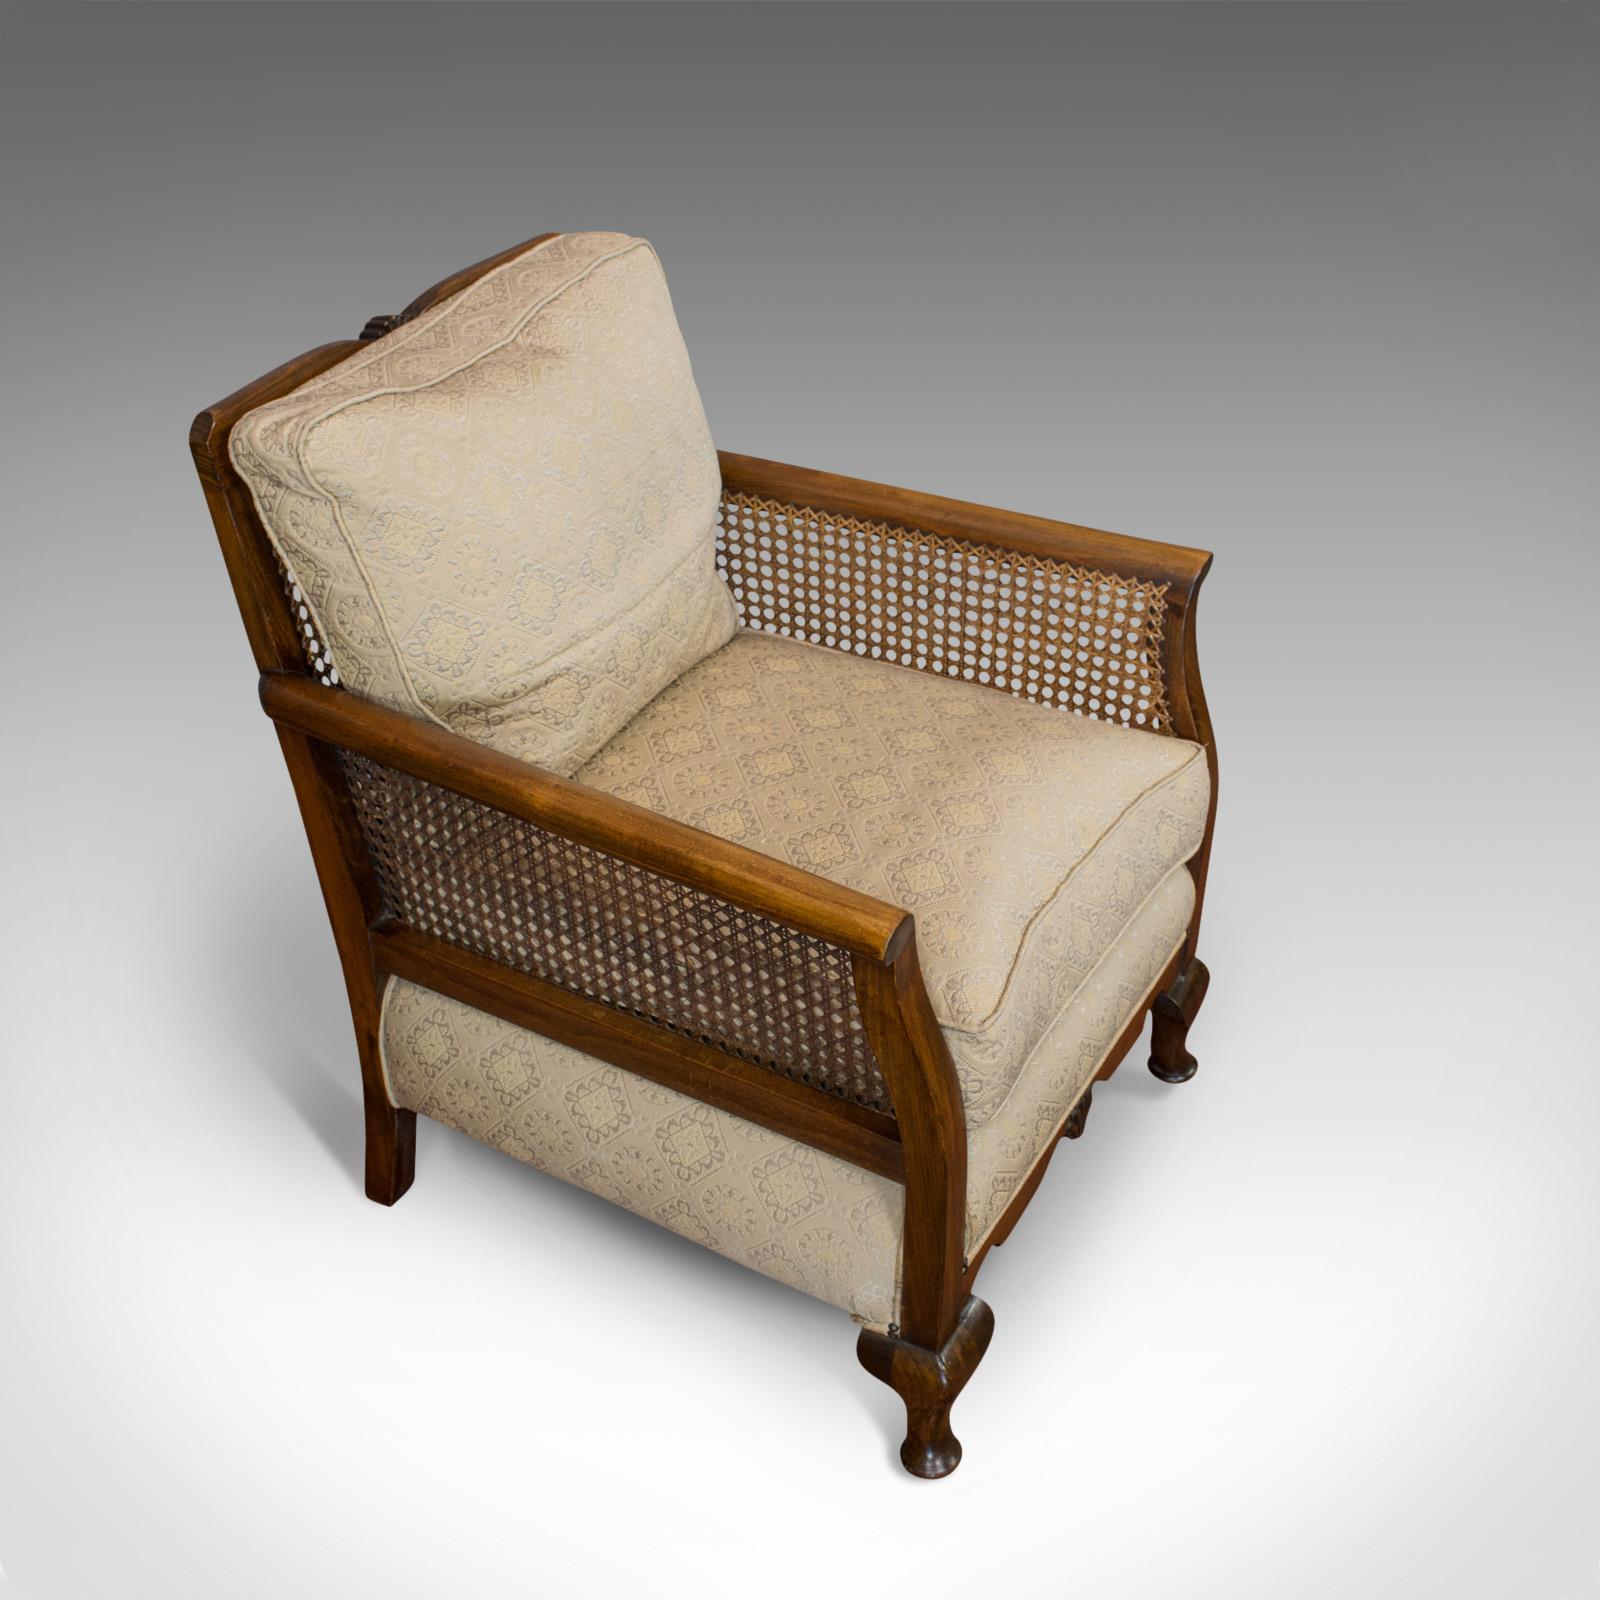 Fabric Antique Bergere Suite, English, Beech, Cane, Chair, Sofa, Set, Edwardian